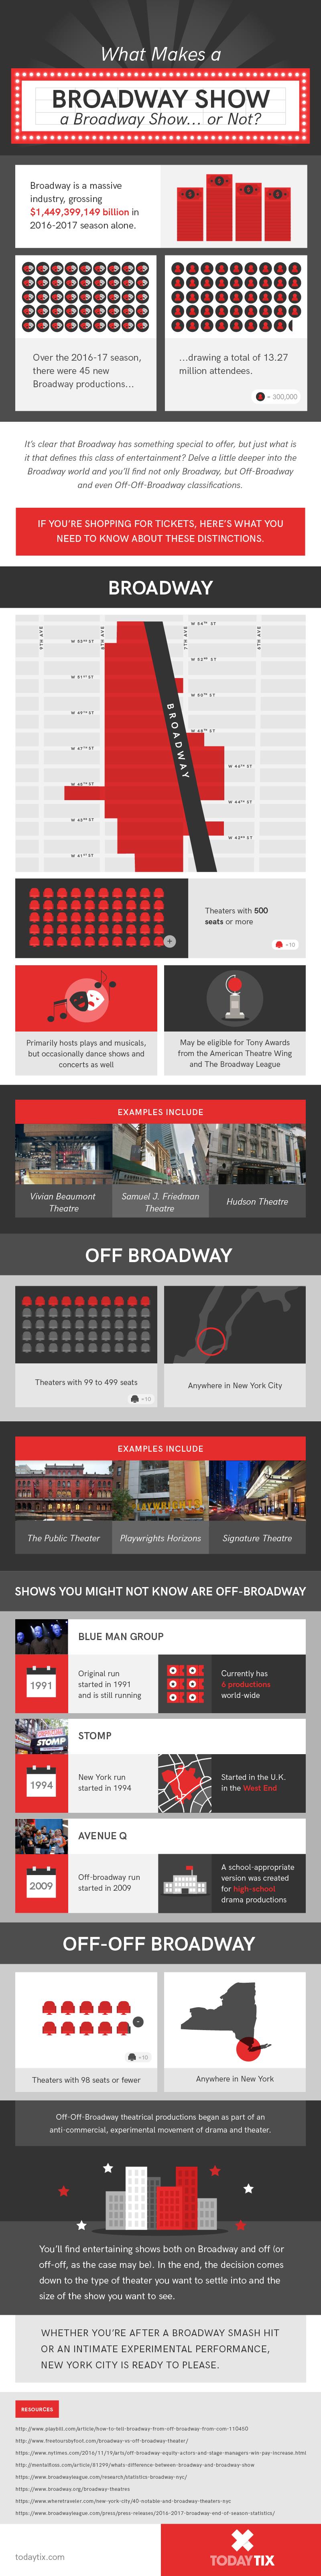 Broadway vs Off Broadway Theaters